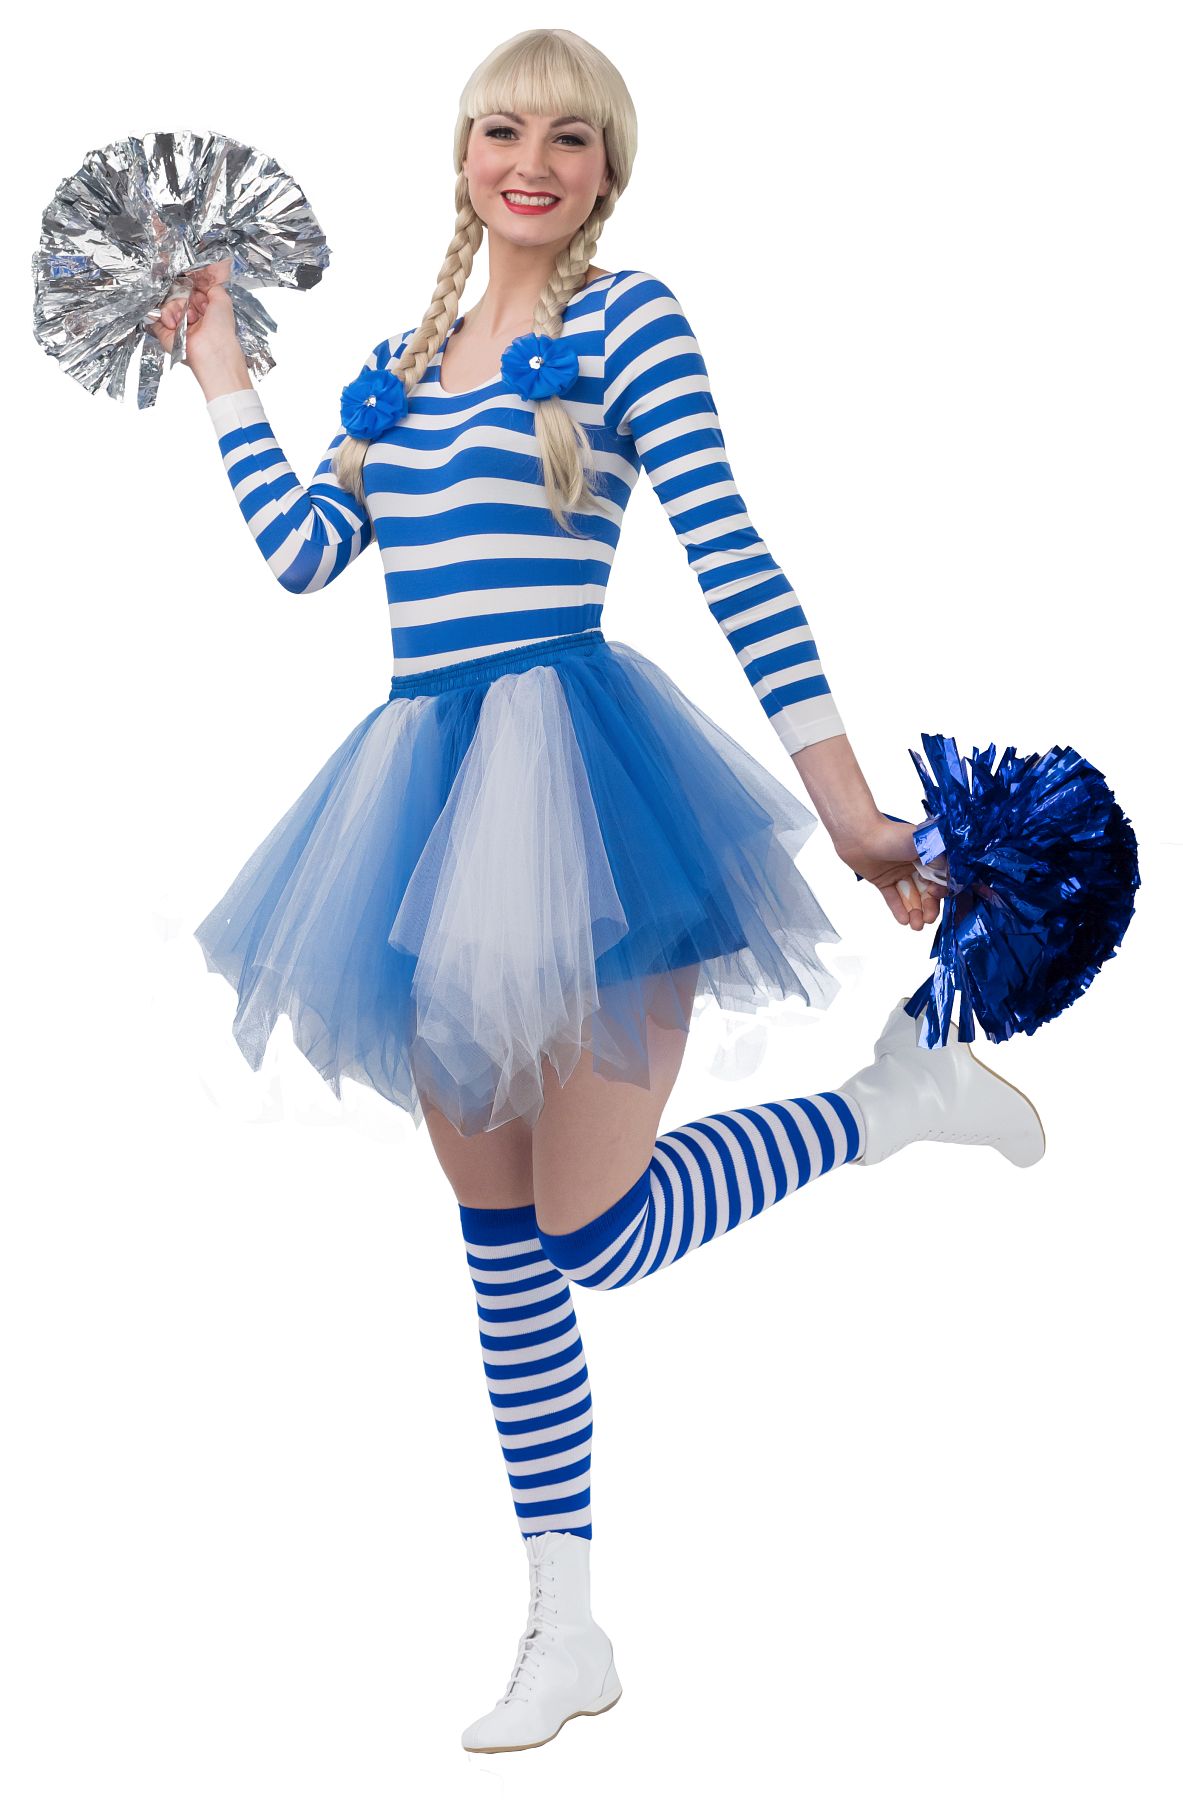 Body, blue-white striped